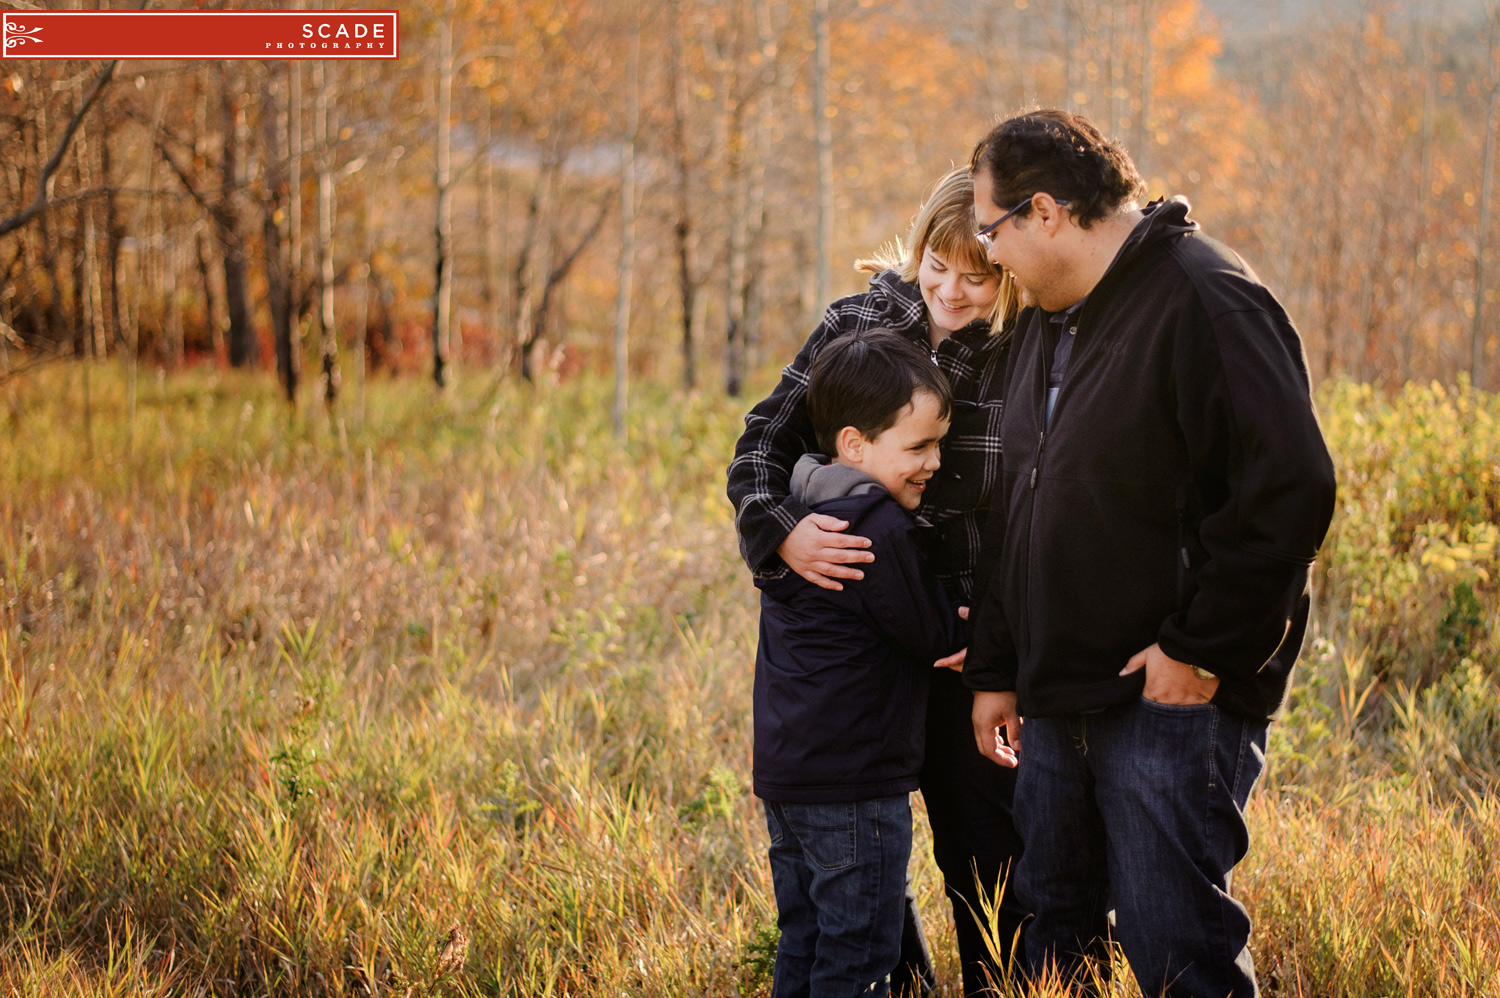 Edmonton Fall Family Photography -